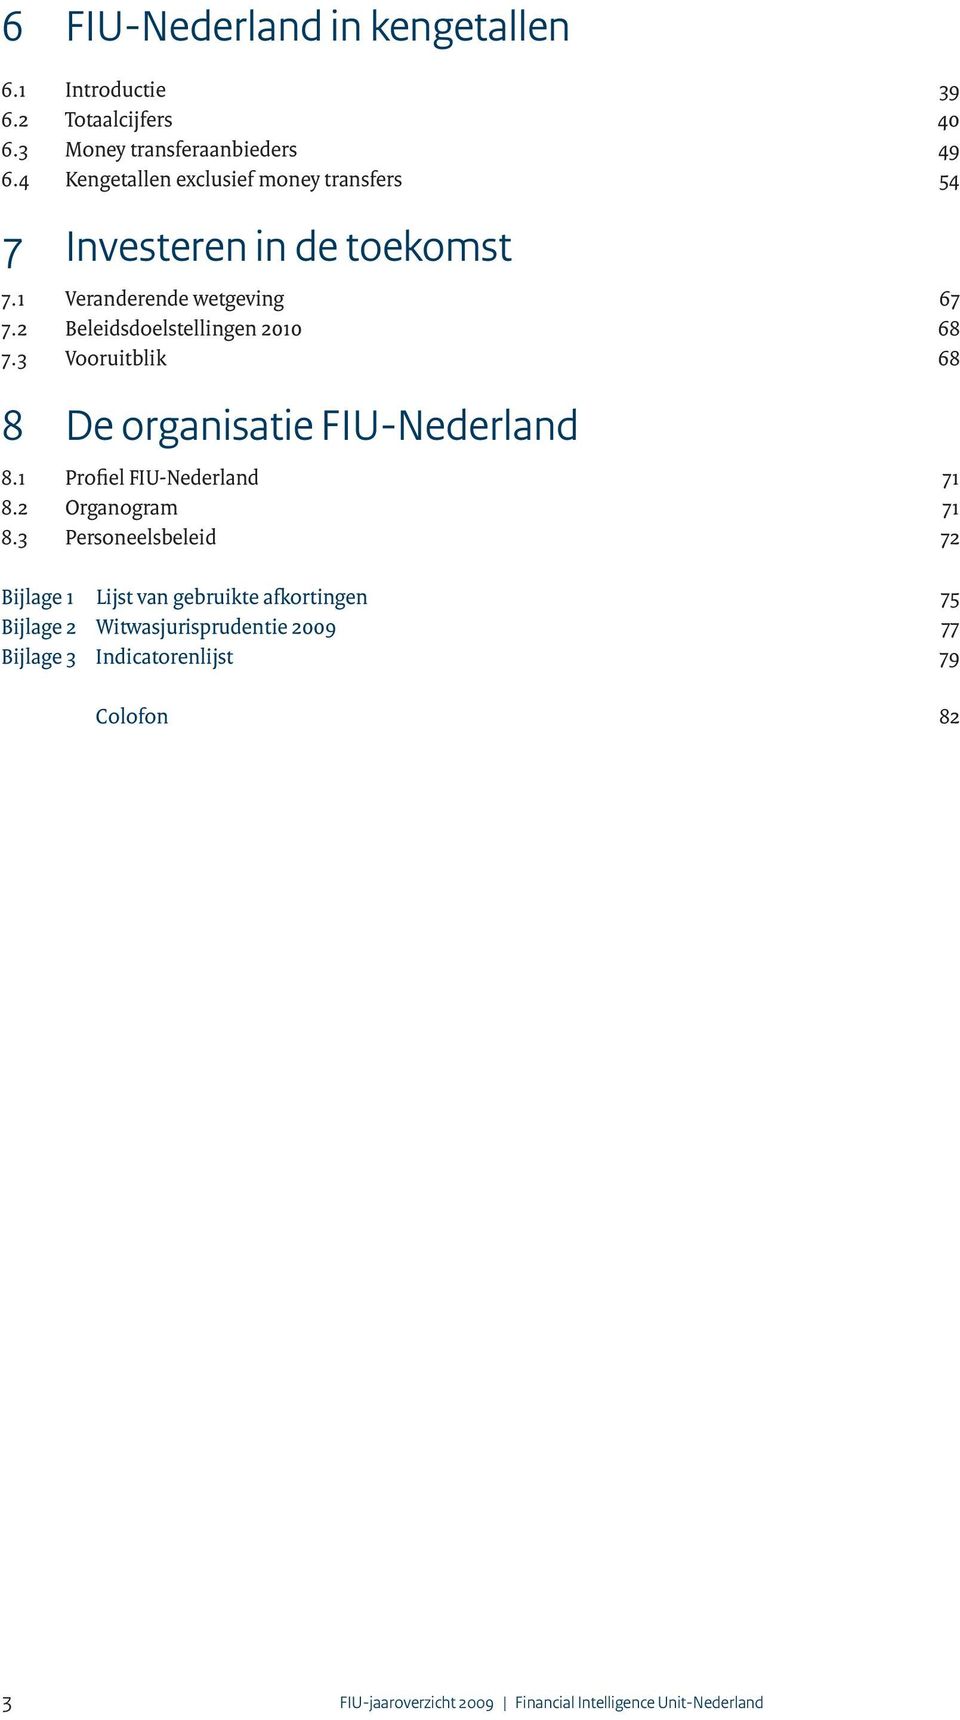 3 Vooruitblik 68 8 De organisatie FIU-Nederland 8.1 Profiel FIU-Nederland 71 8.2 Organogram 71 8.